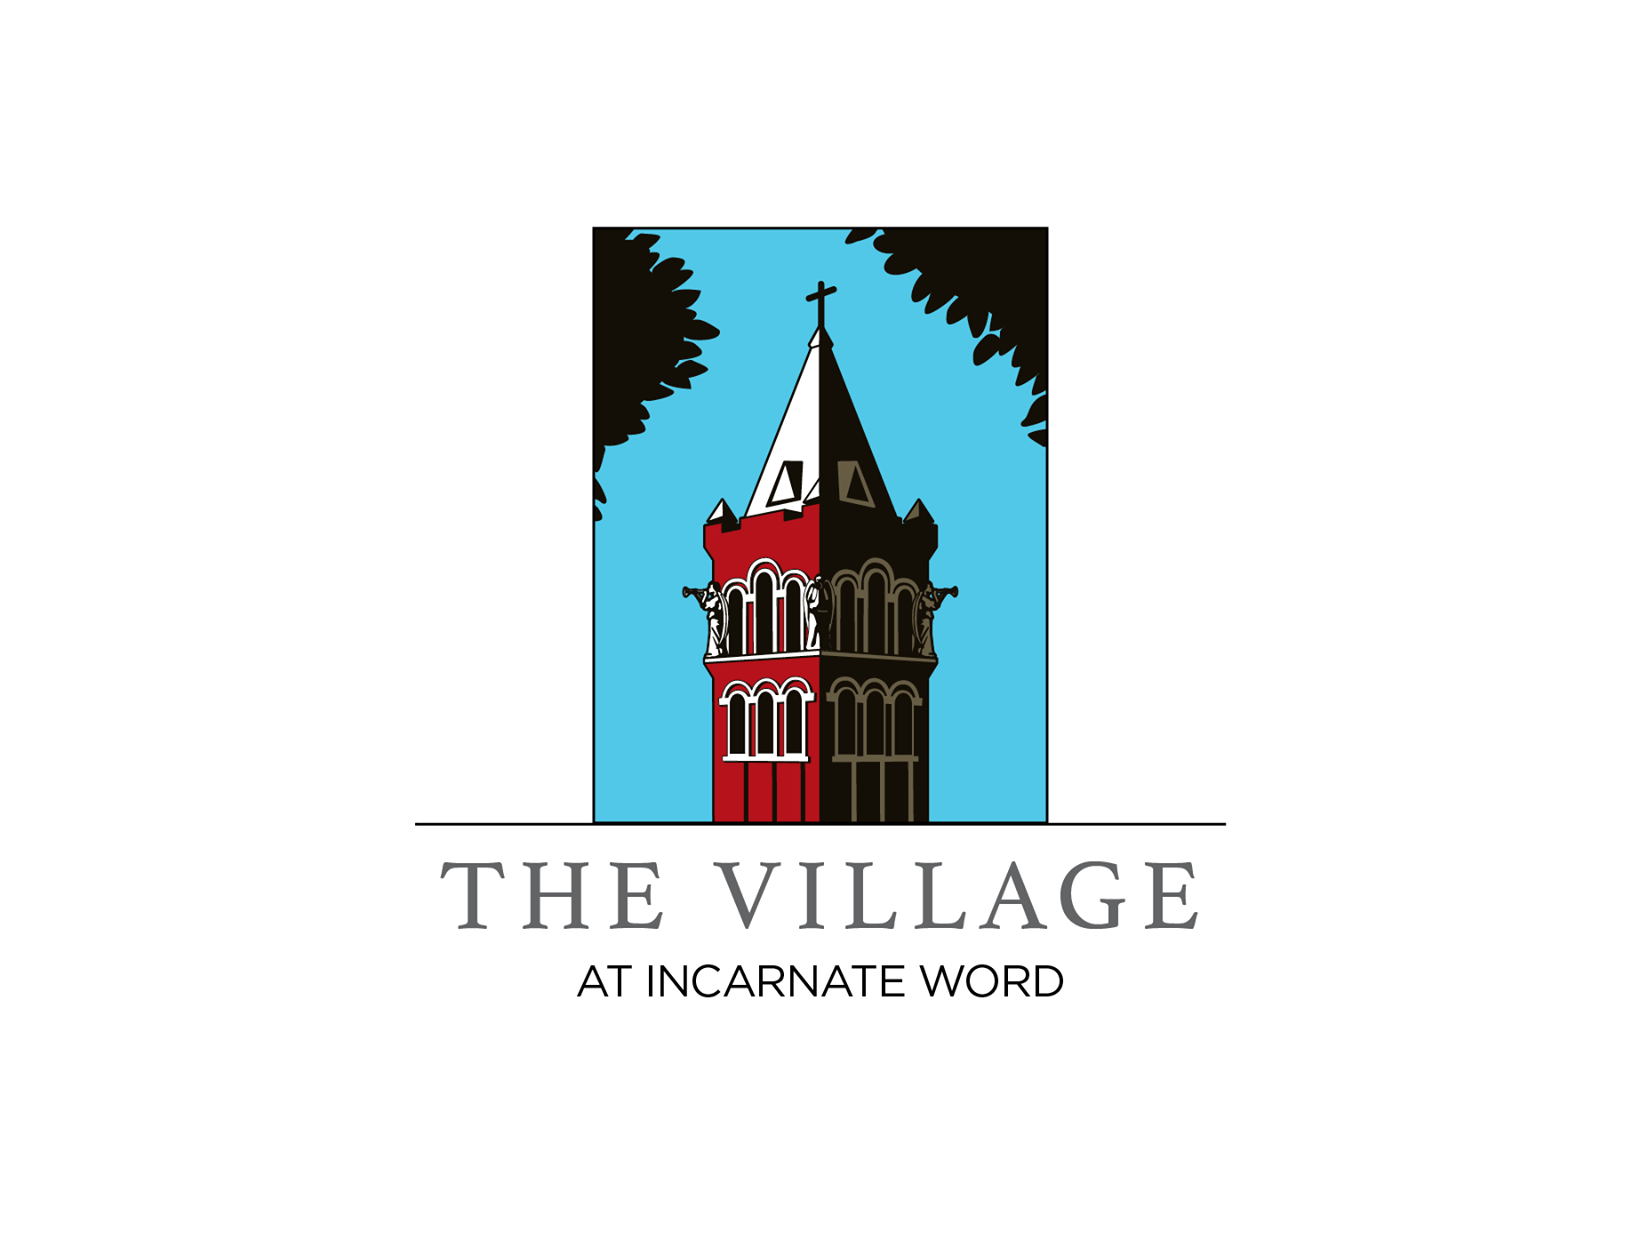 The Village at Incarnate Word image